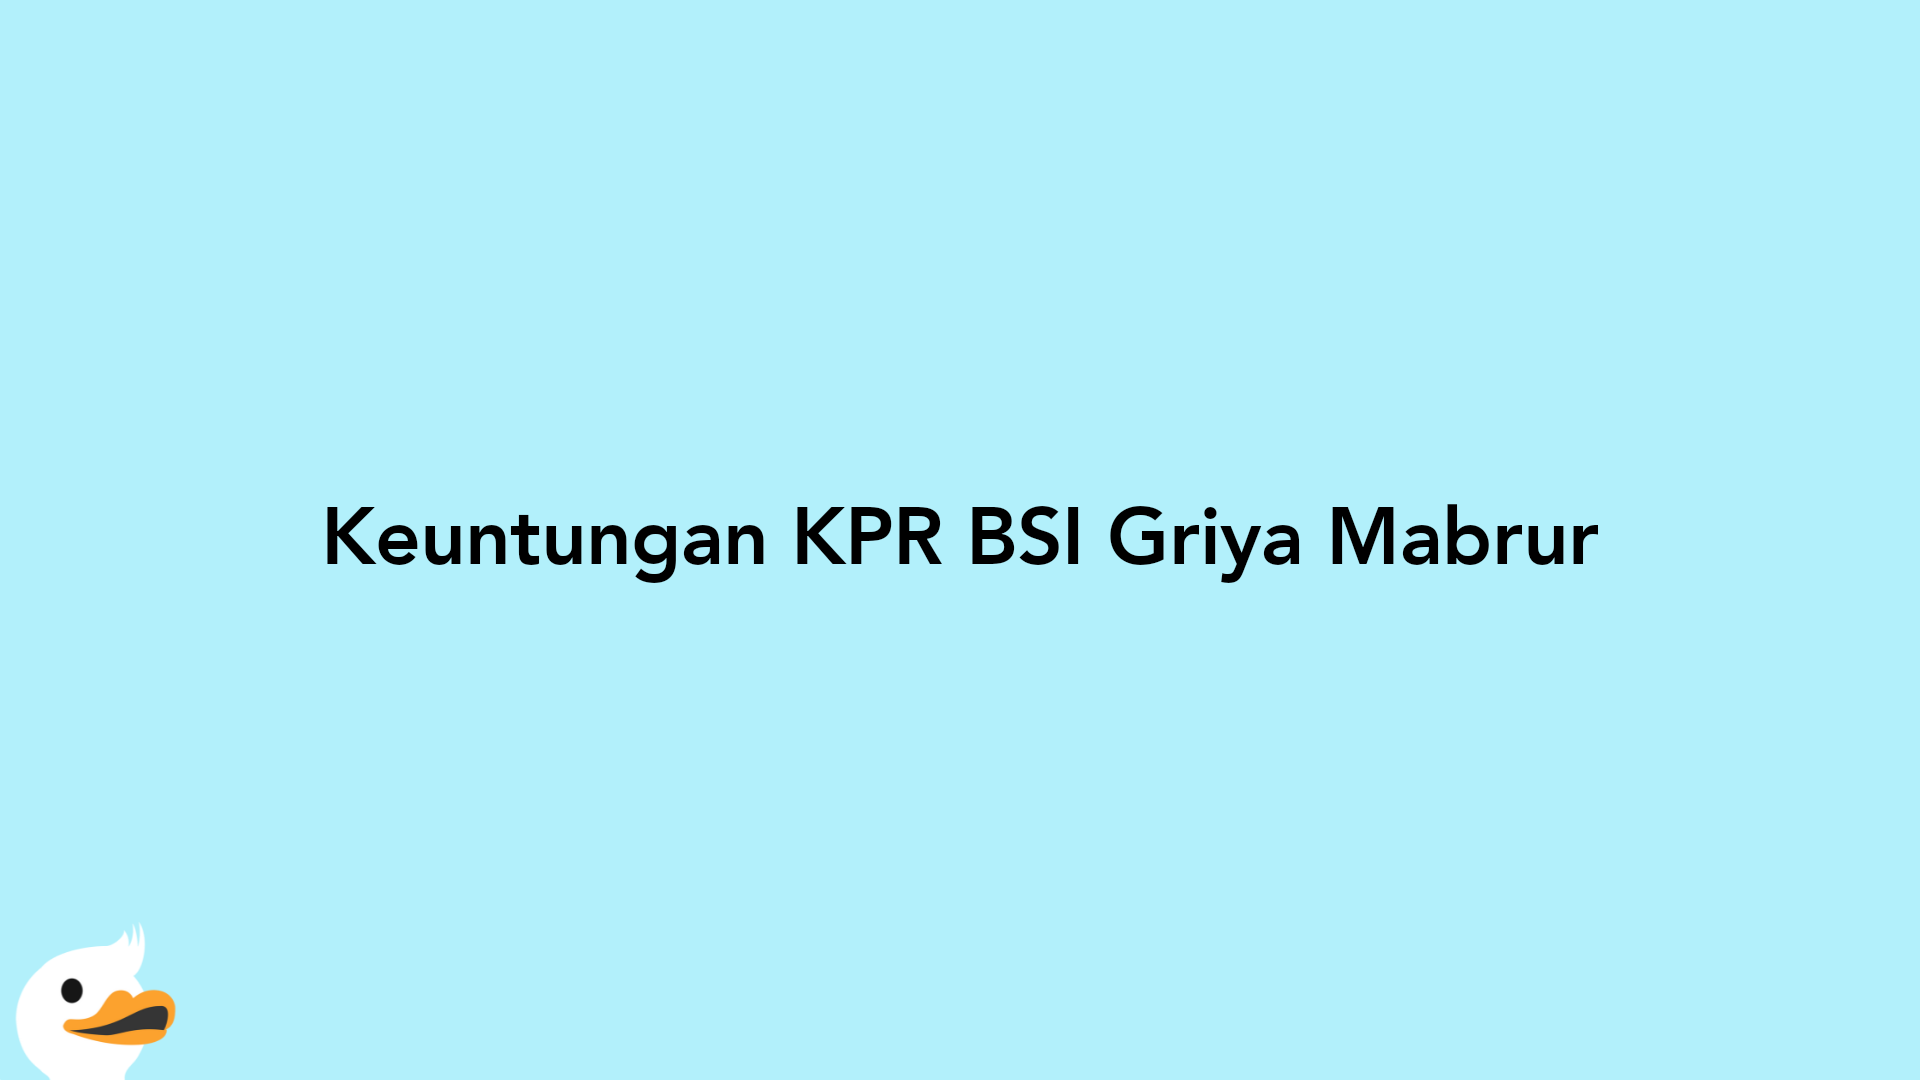 Keuntungan KPR BSI Griya Mabrur